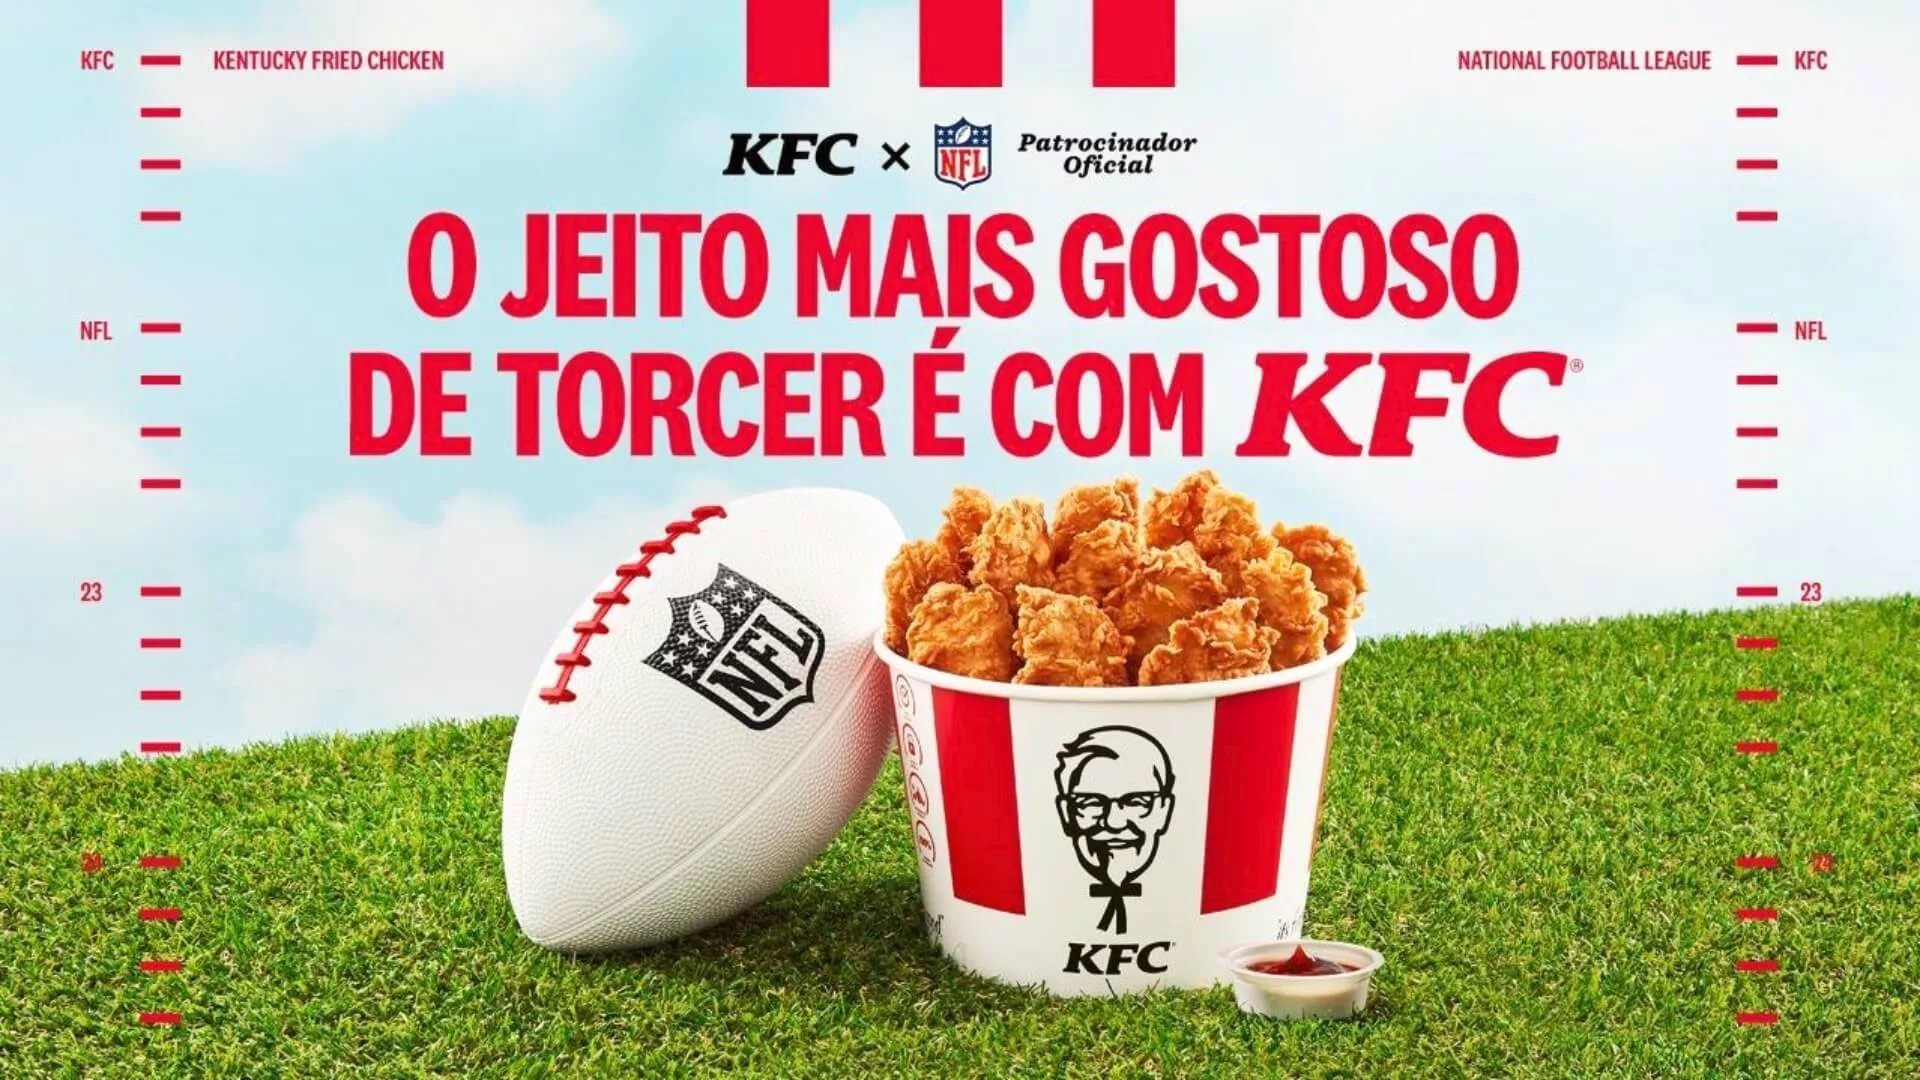 KFC reforça presença no Brasil com patrocínio exclusivo à NFL